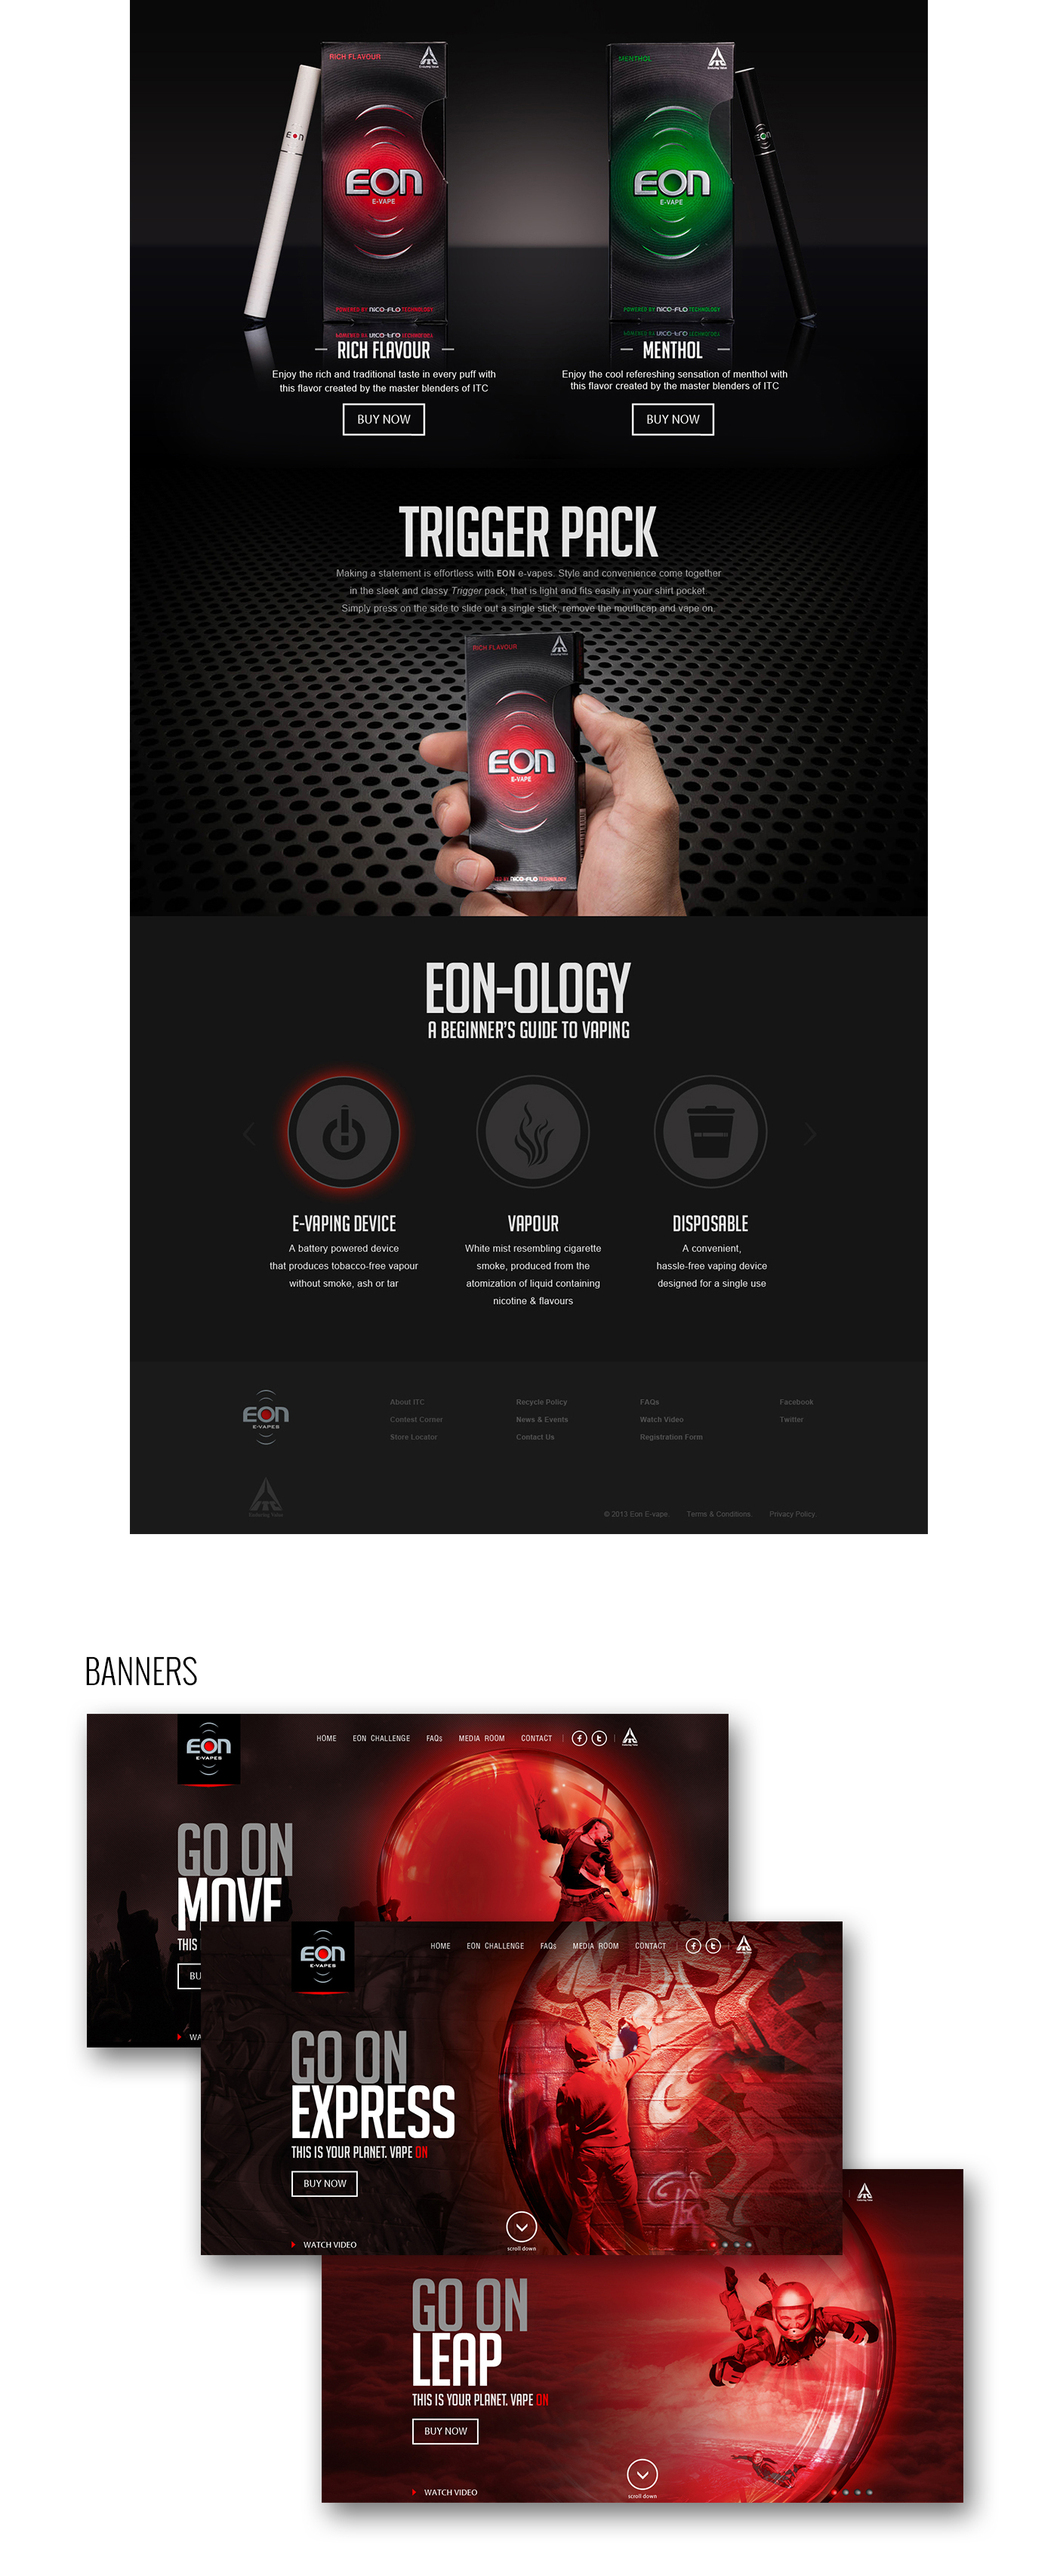 Website posts weblayout ui design Responsive ITC eon E Cigs cigaratte  banners